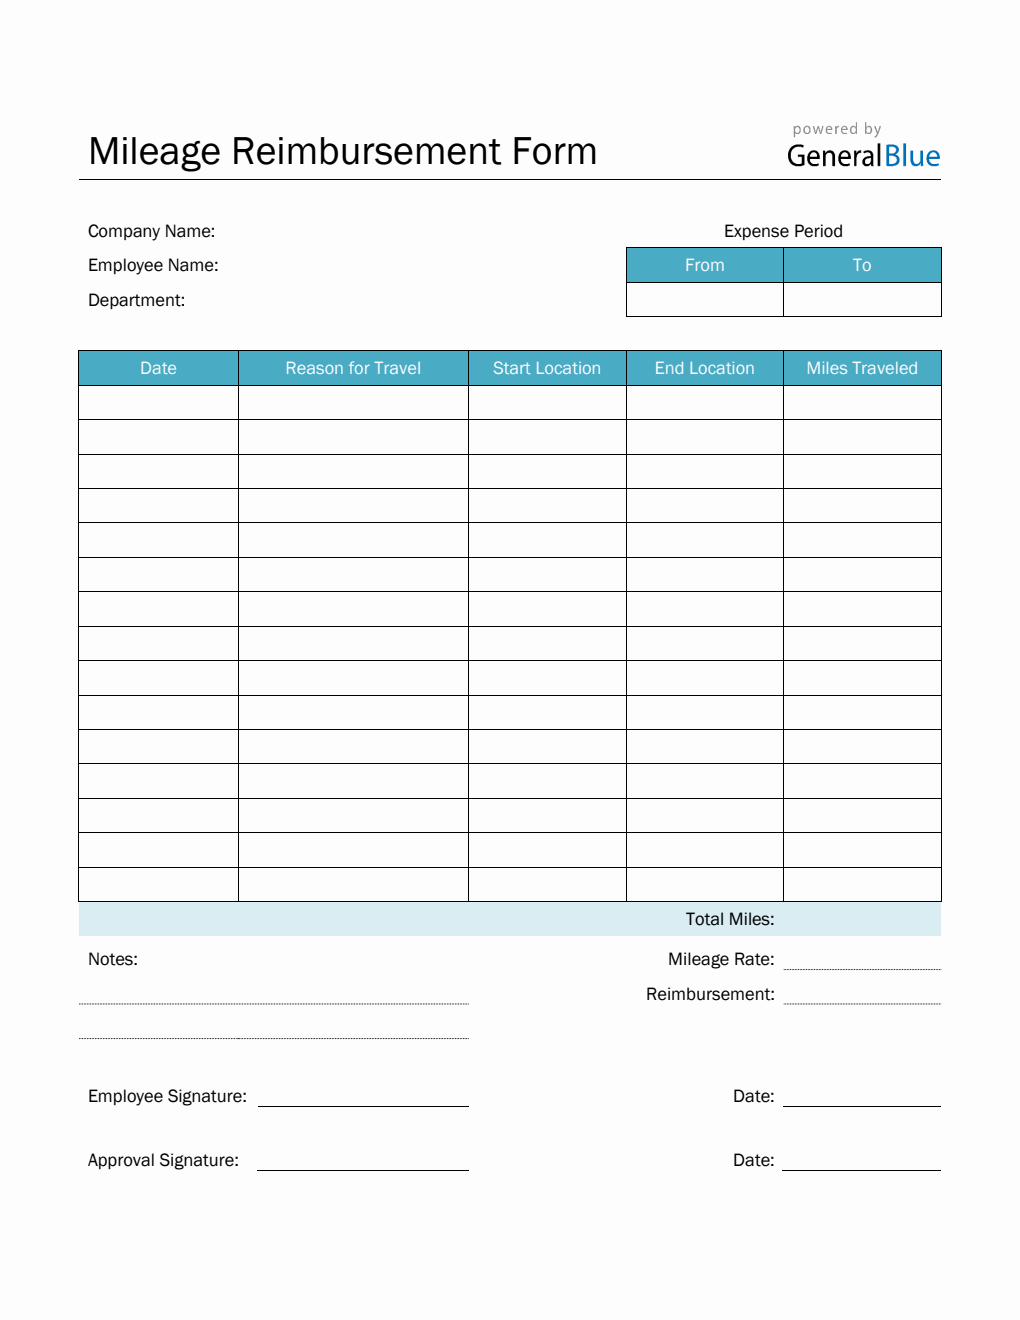 Mileage Reimbursement Form in PDF (Basic)